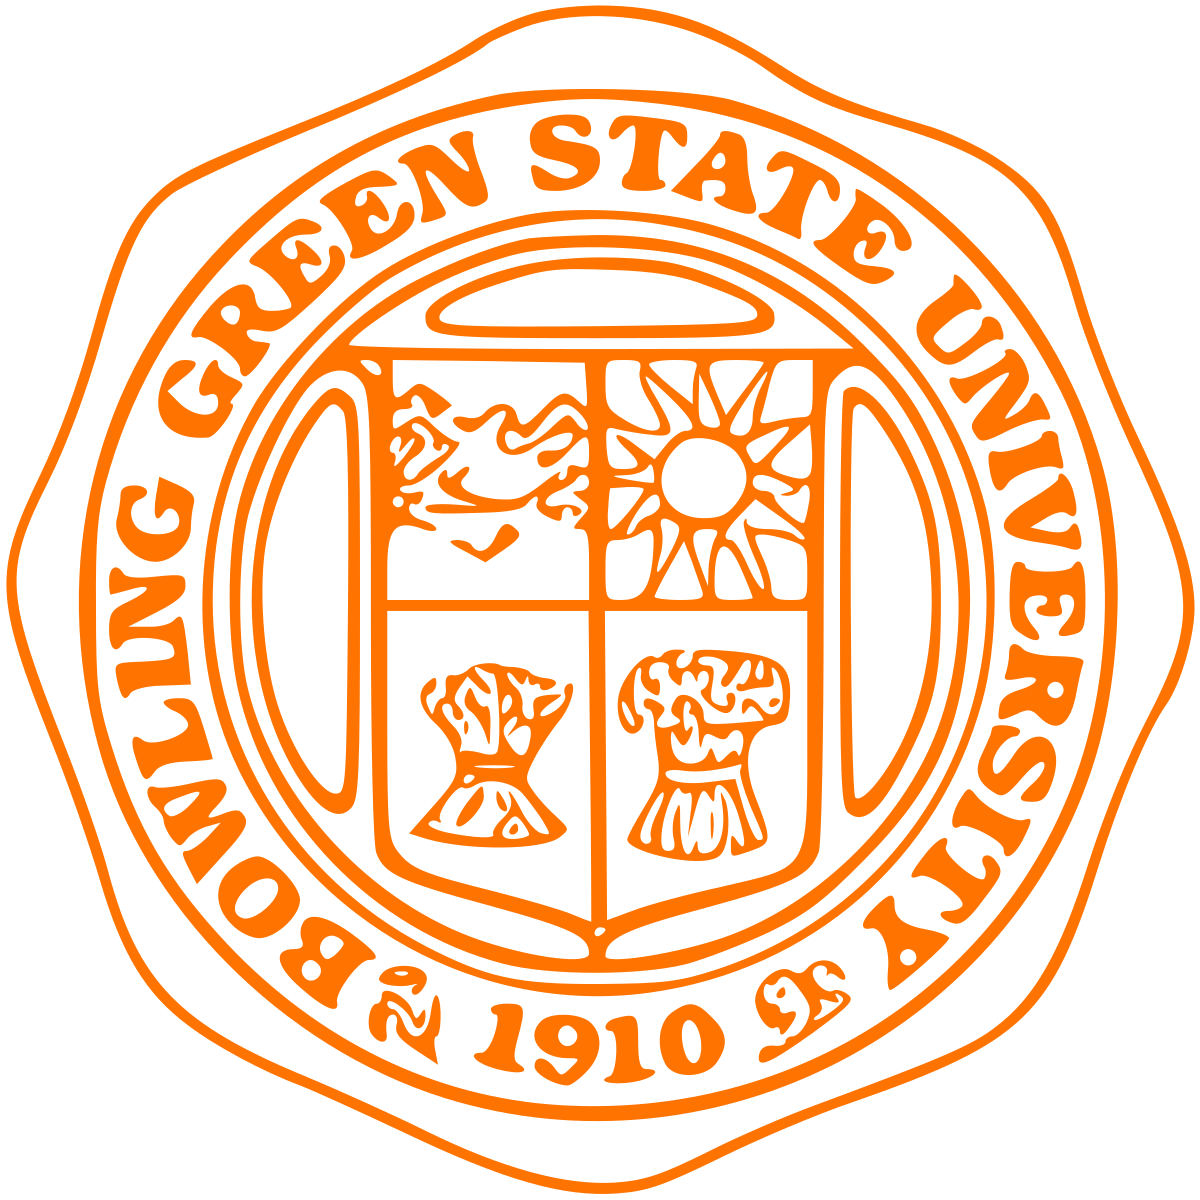 Ohio State University - Wikipedia